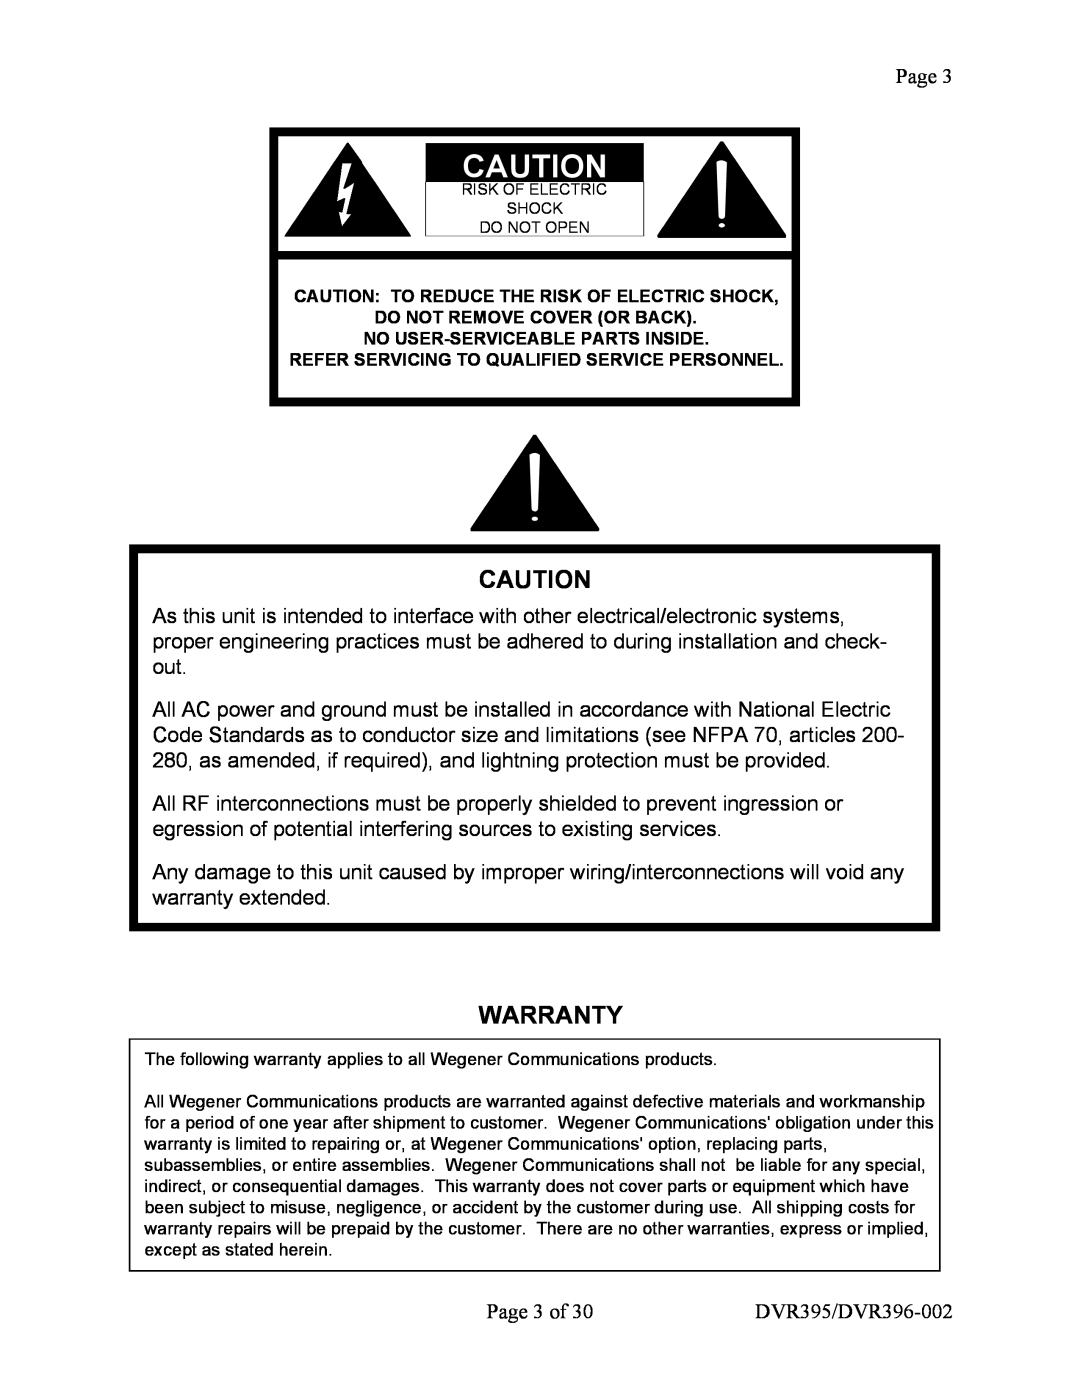 Wegener Communications manual Warranty, Page 3 of, DVR395/DVR396-002 